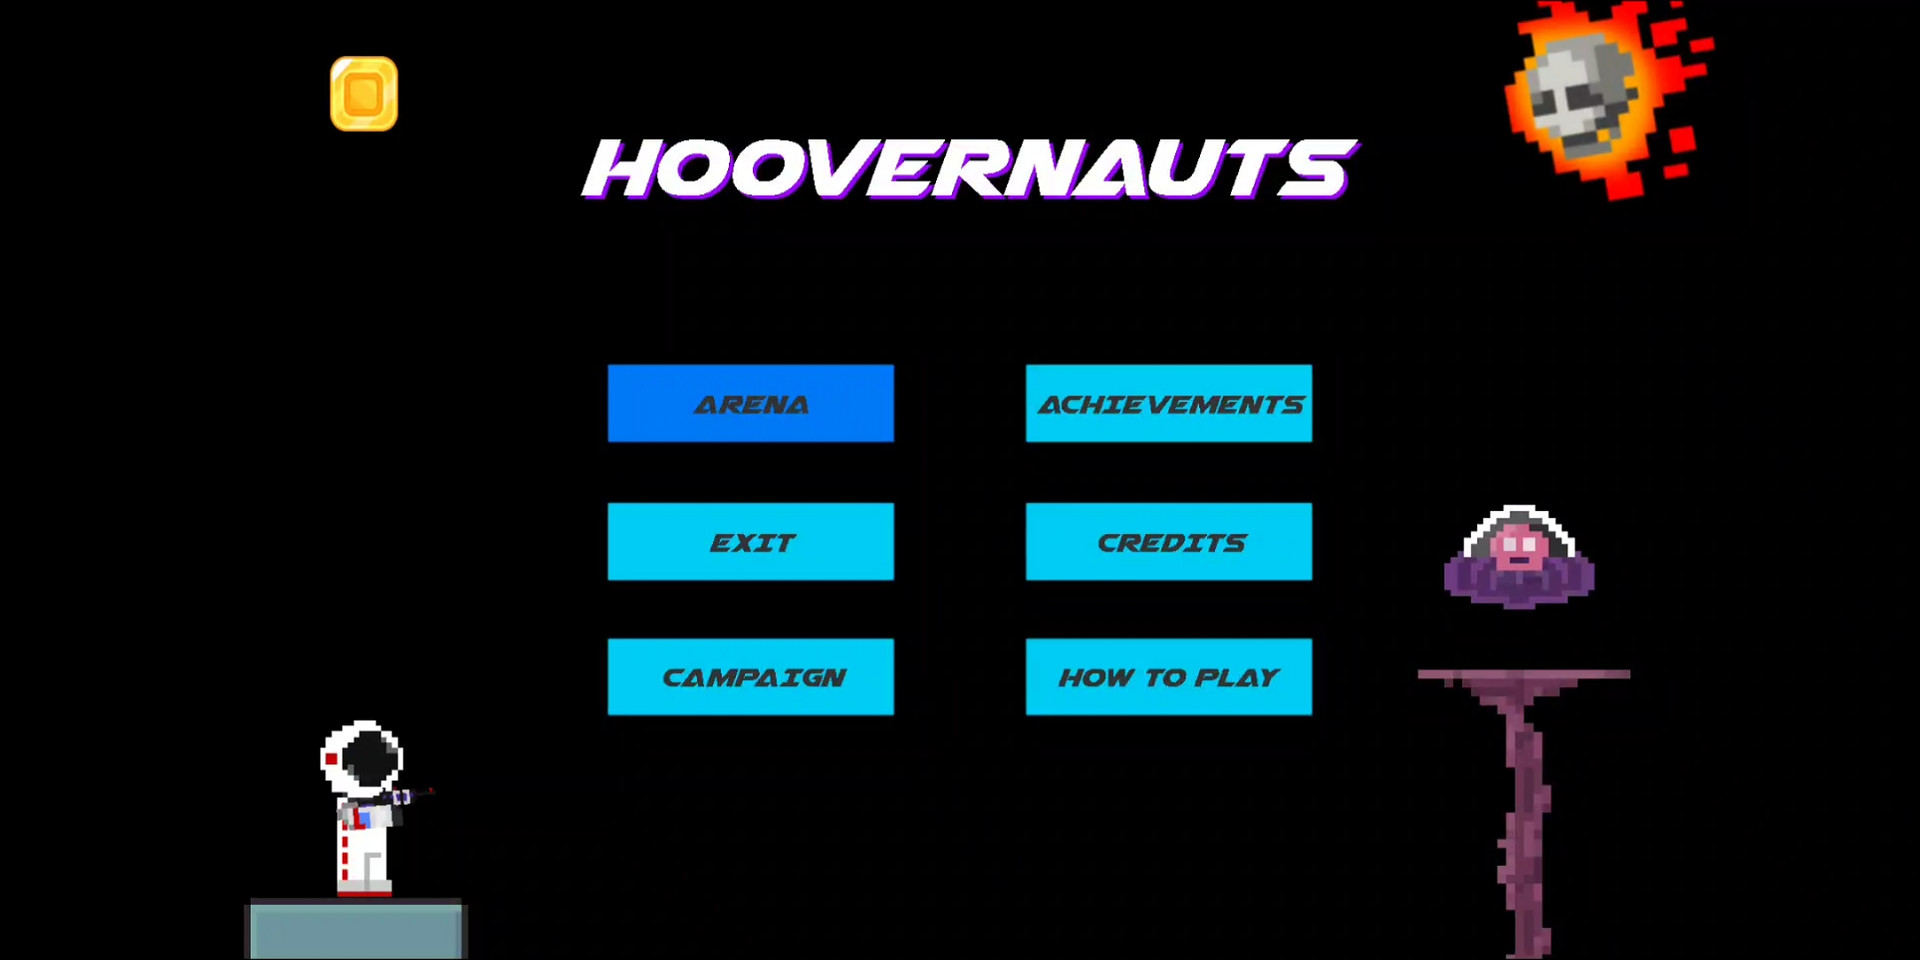 Hoovernauts图片